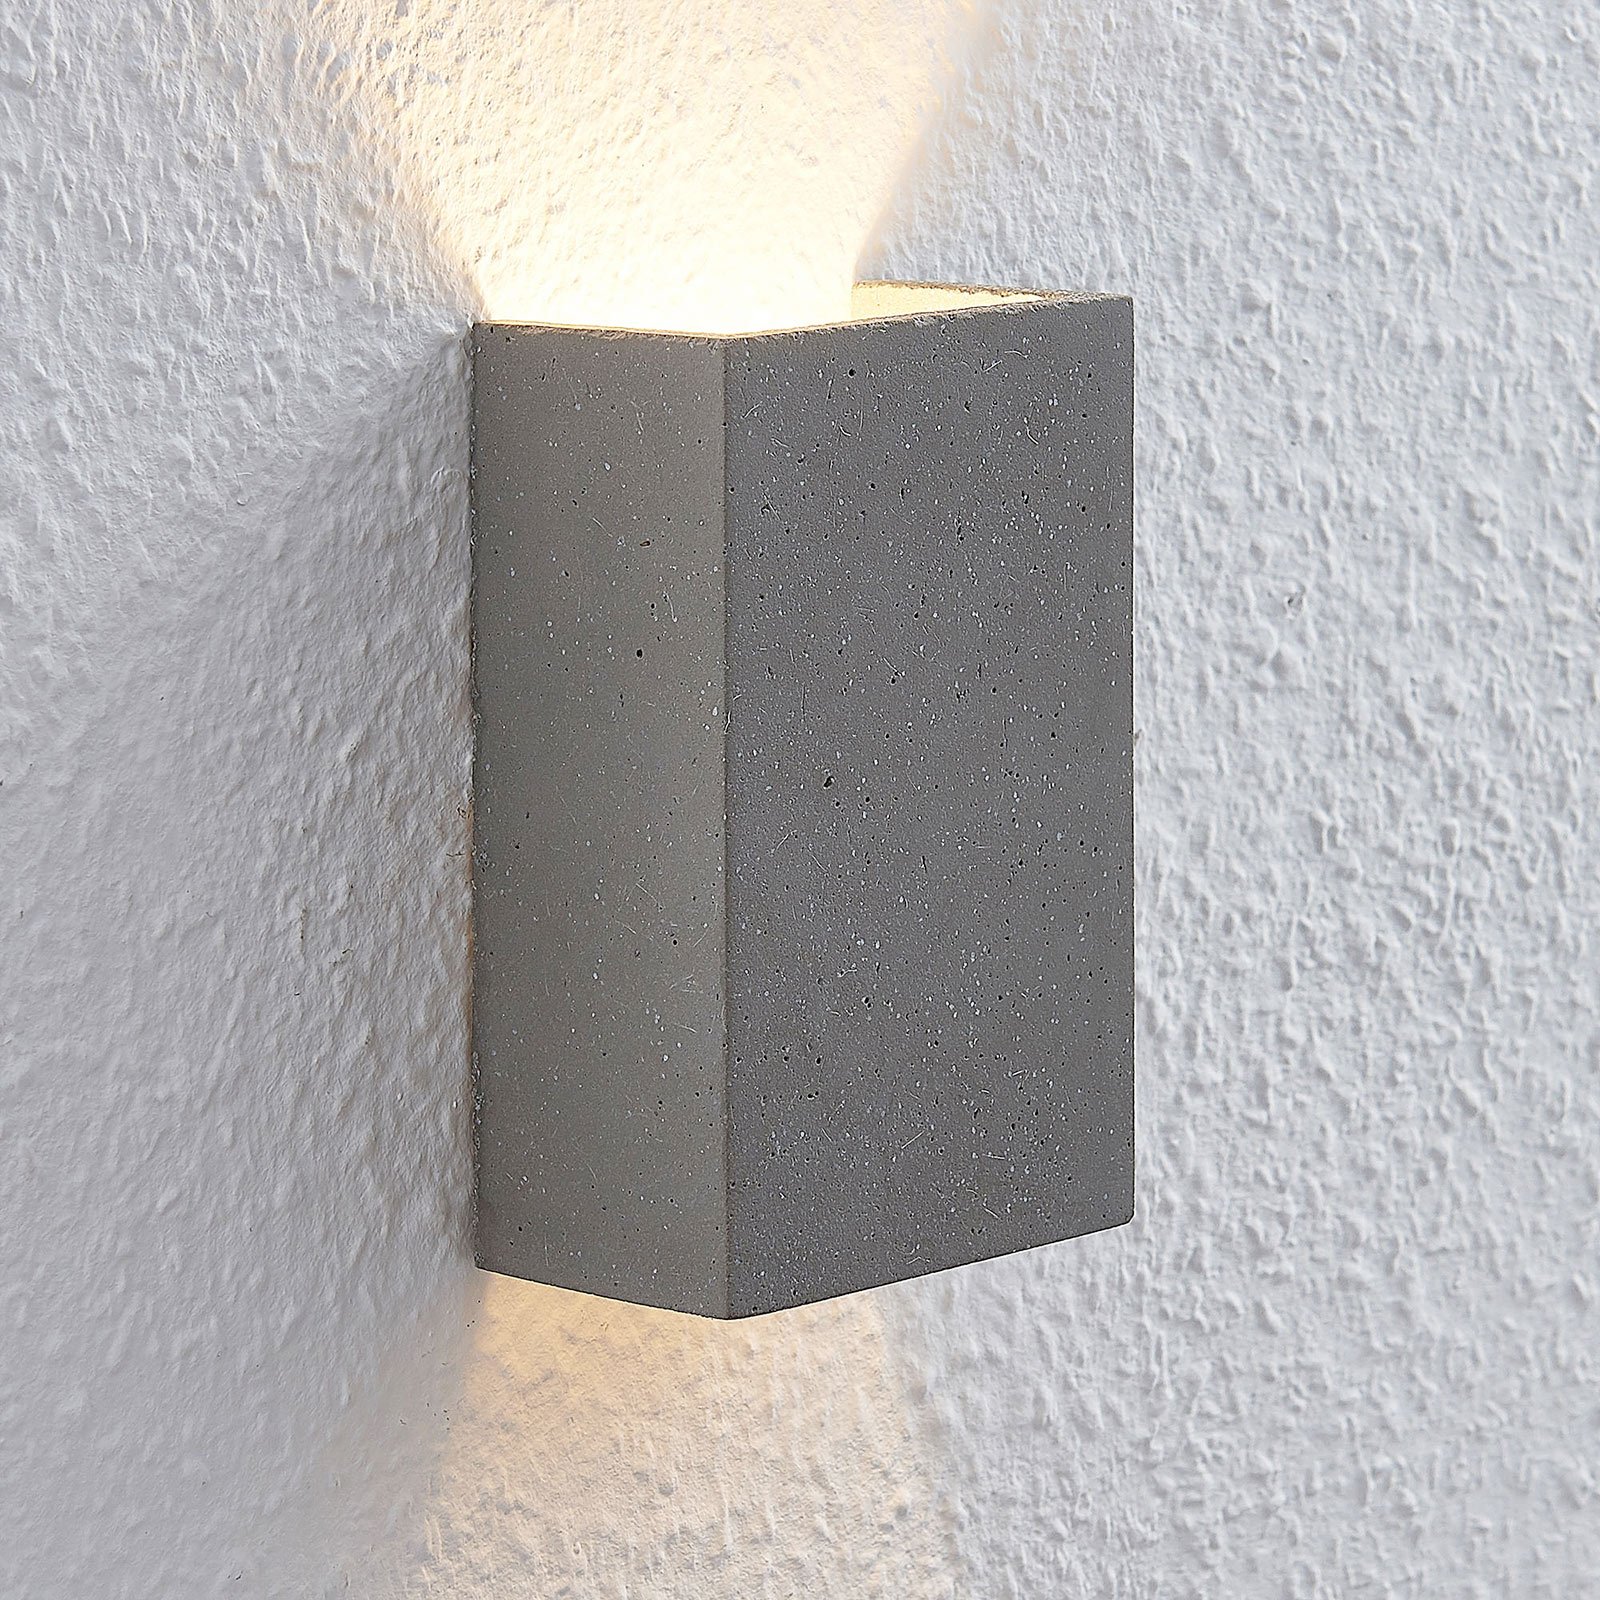 Lindby wall light Albin, grey, concrete, G9, 16 cm high